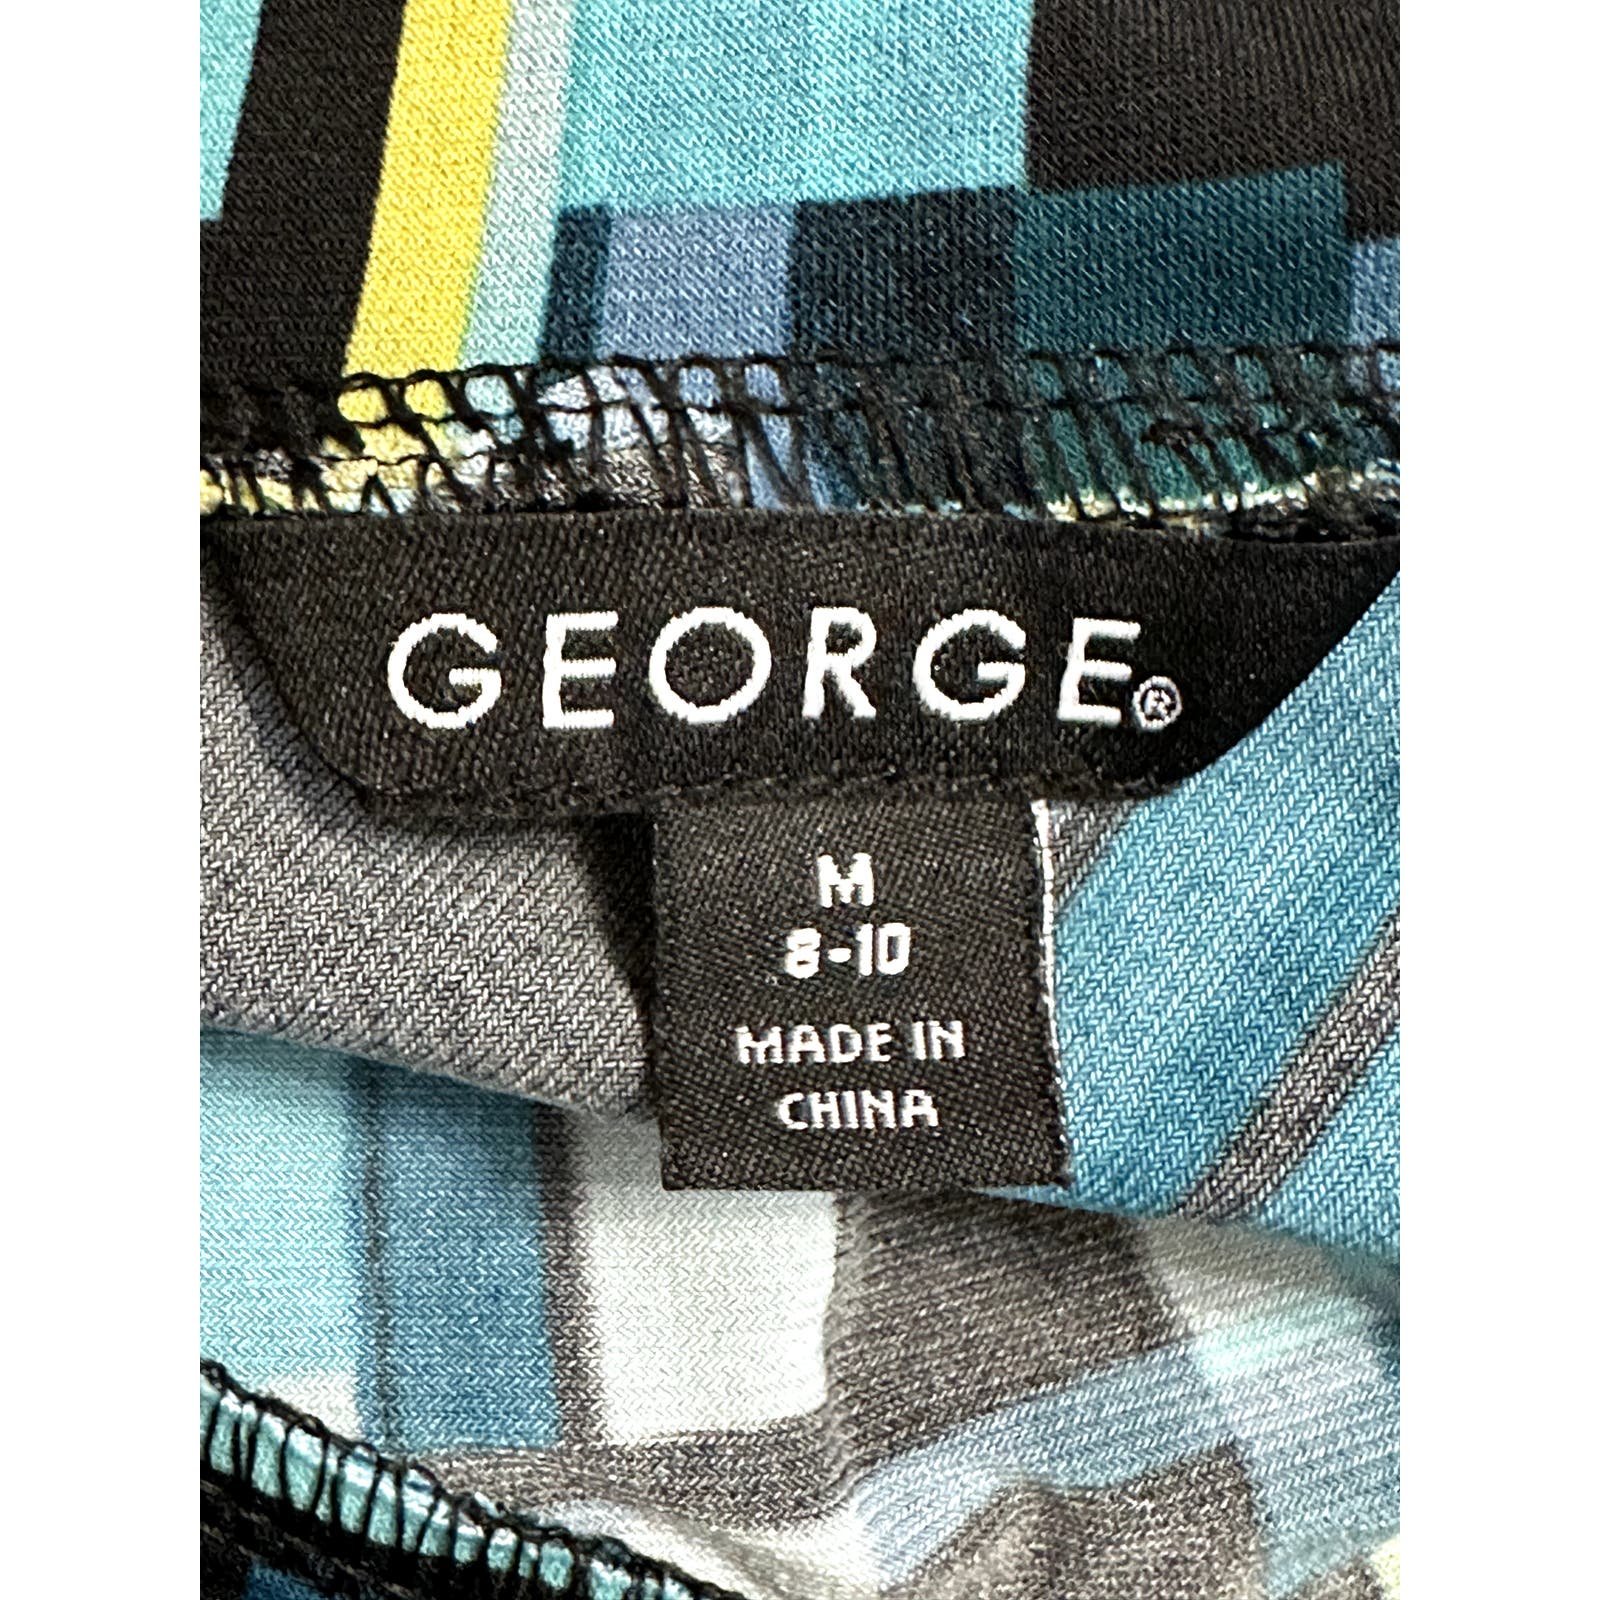 The Best Seller George Multi Colored Knee Length Skirt Pull On Elastic Waist M 8/10 KXlBwOuaS for sale